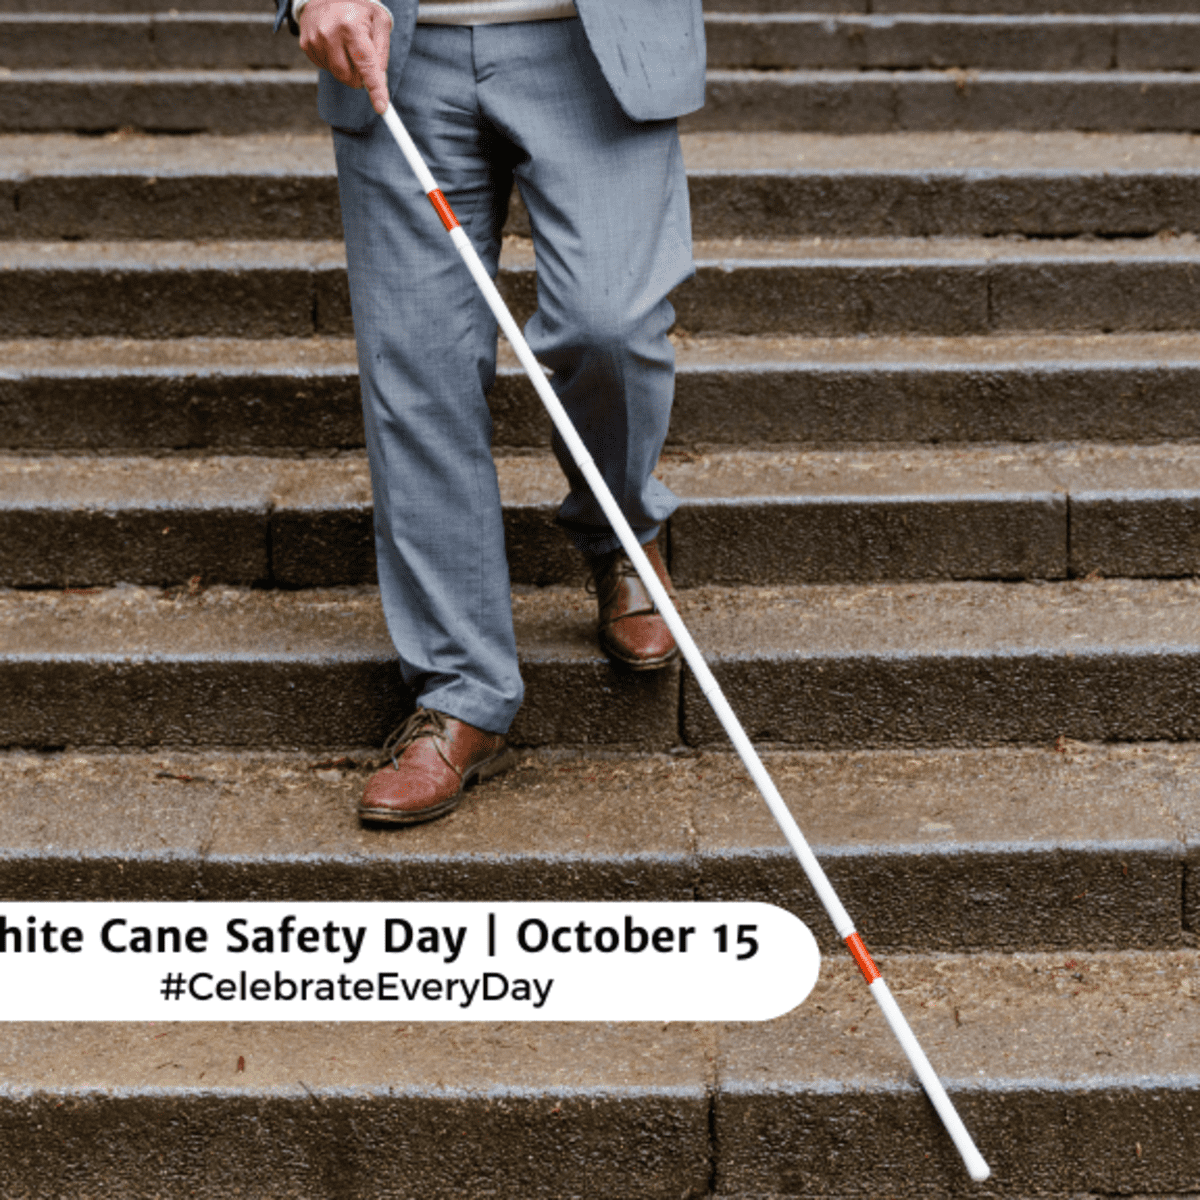 WHITE CANE SAFETY DAY - October 15 - National Day Calendar